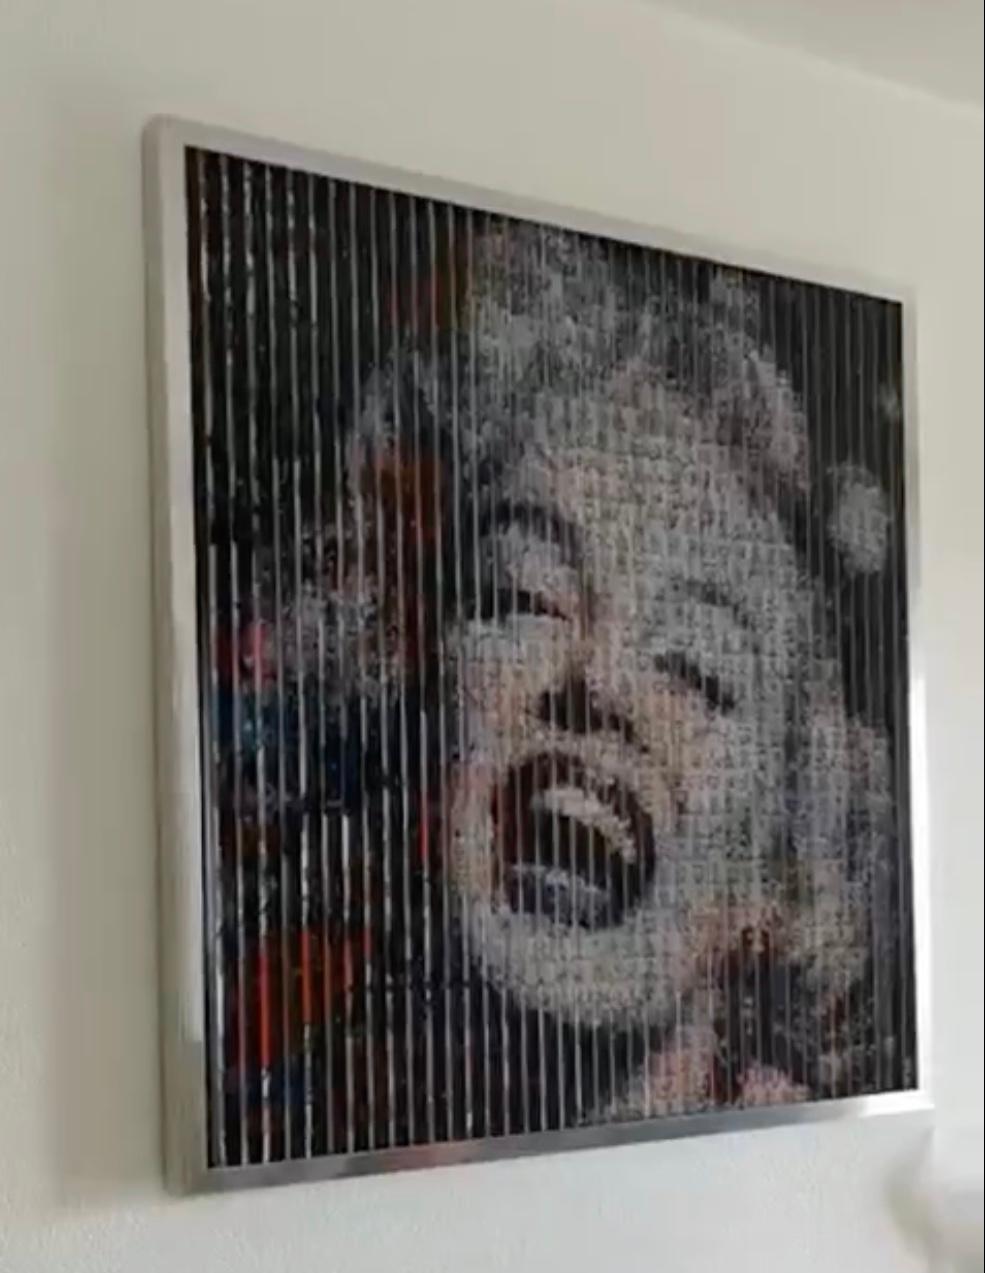 Hot Kinetic Art - Marilyn Monroe  - Pop Art Mixed Media Art by LNG